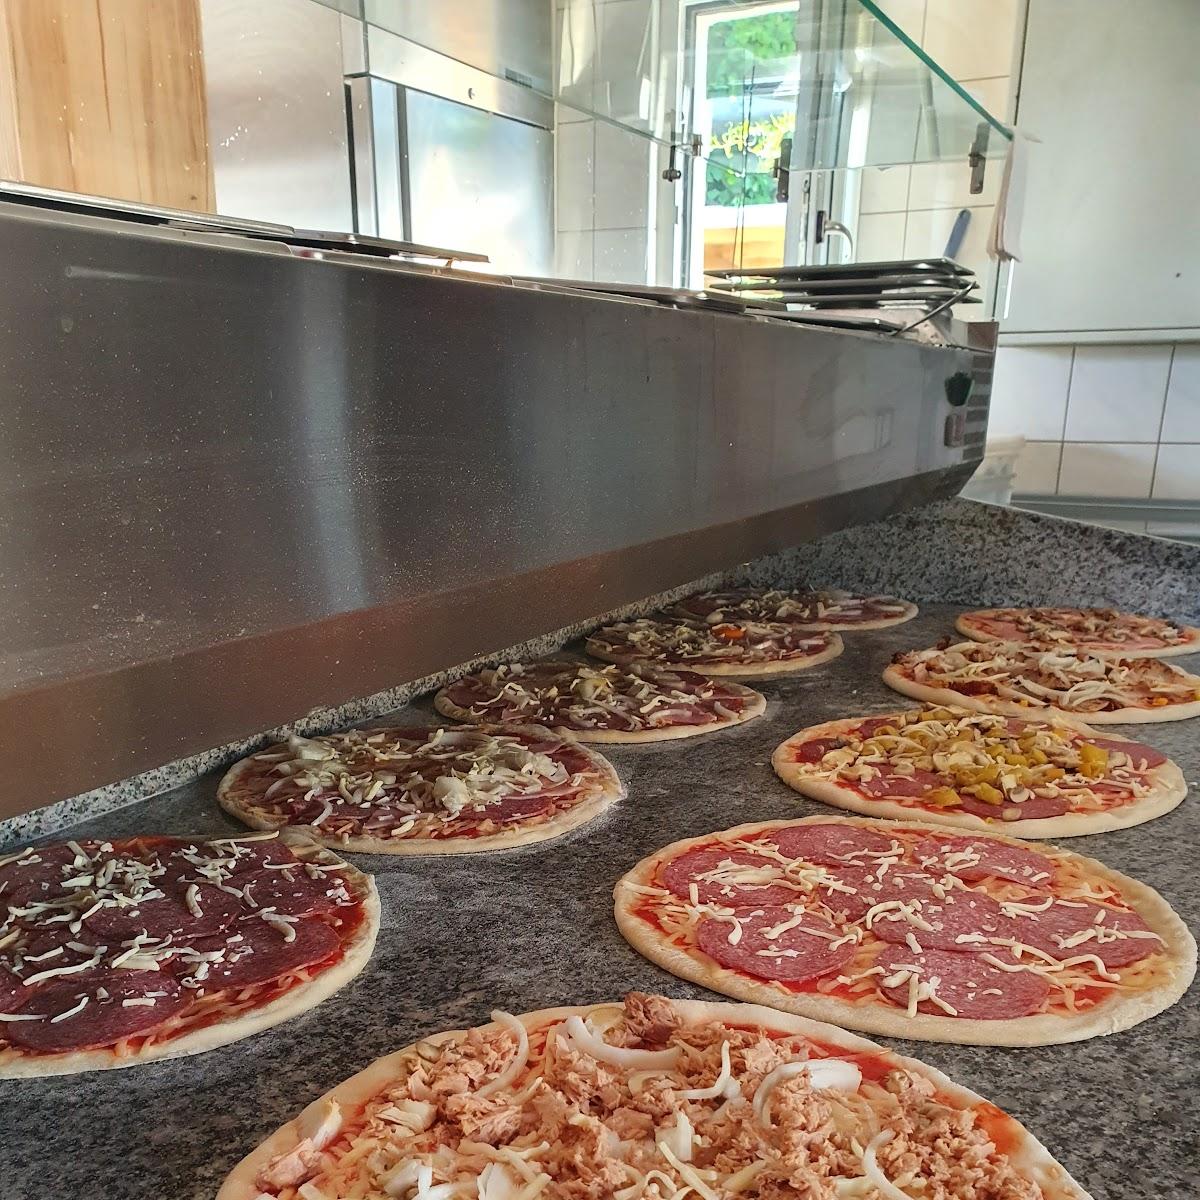 Restaurant "Pizzeria Kebap Milano" in Wartberg an der Krems